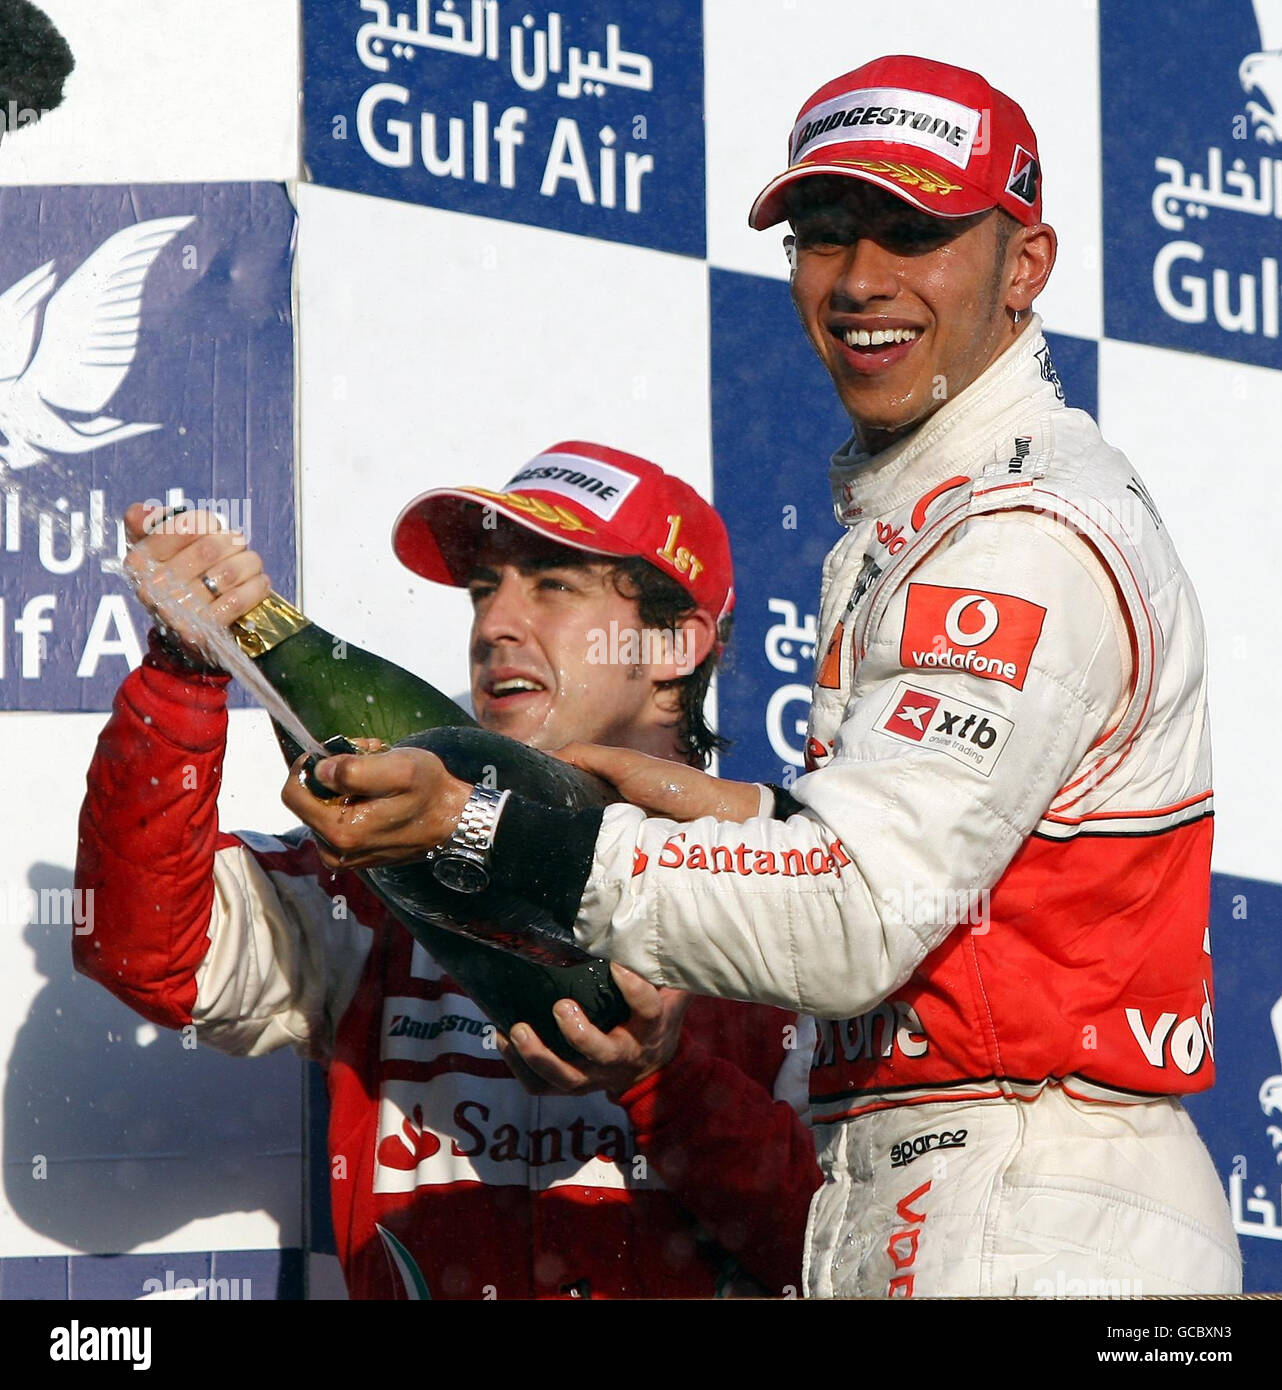 McLaren's Lewis Hamilton (right) celebrates his third place with winner Fernando Alonso during the Gulf Air Bahrain Grand Prix at the Bahrain International Circuit in Sakhir, Bahrain. Stock Photo